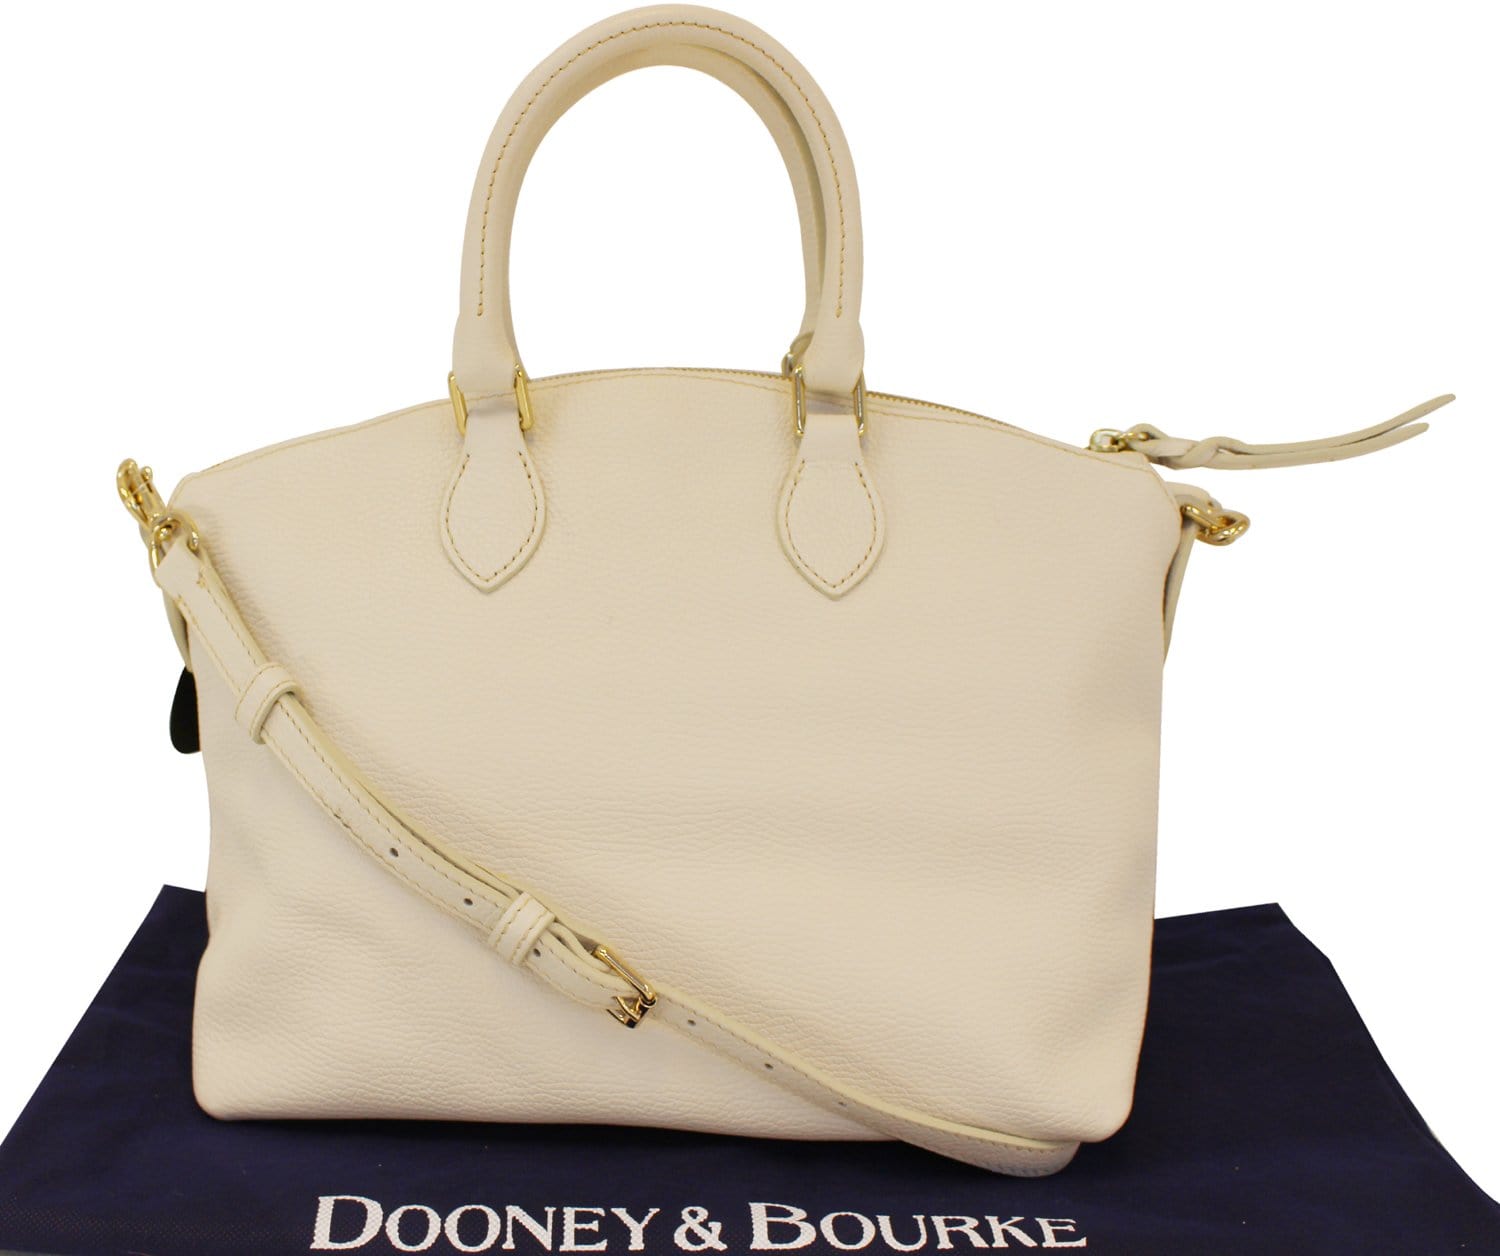 At Auction: Dooney & Bourke Shoulder Tote (New) - Lot 1307